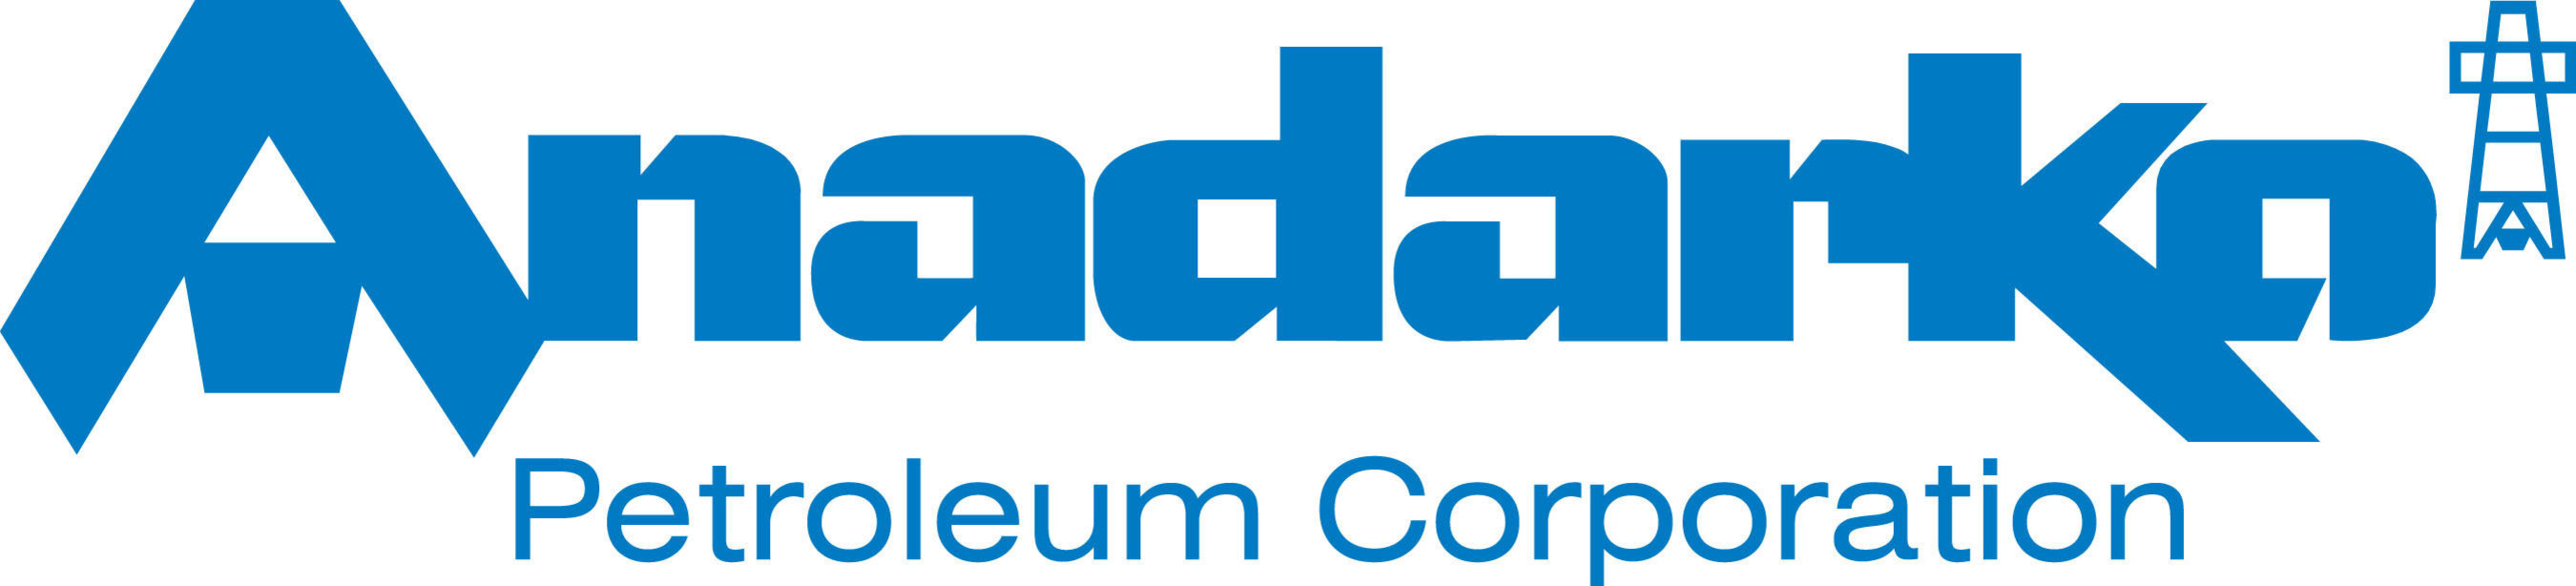 Anadarko Petroleum Corp. Logo (PRNewsFoto/Anadarko Petroleum Corp.)